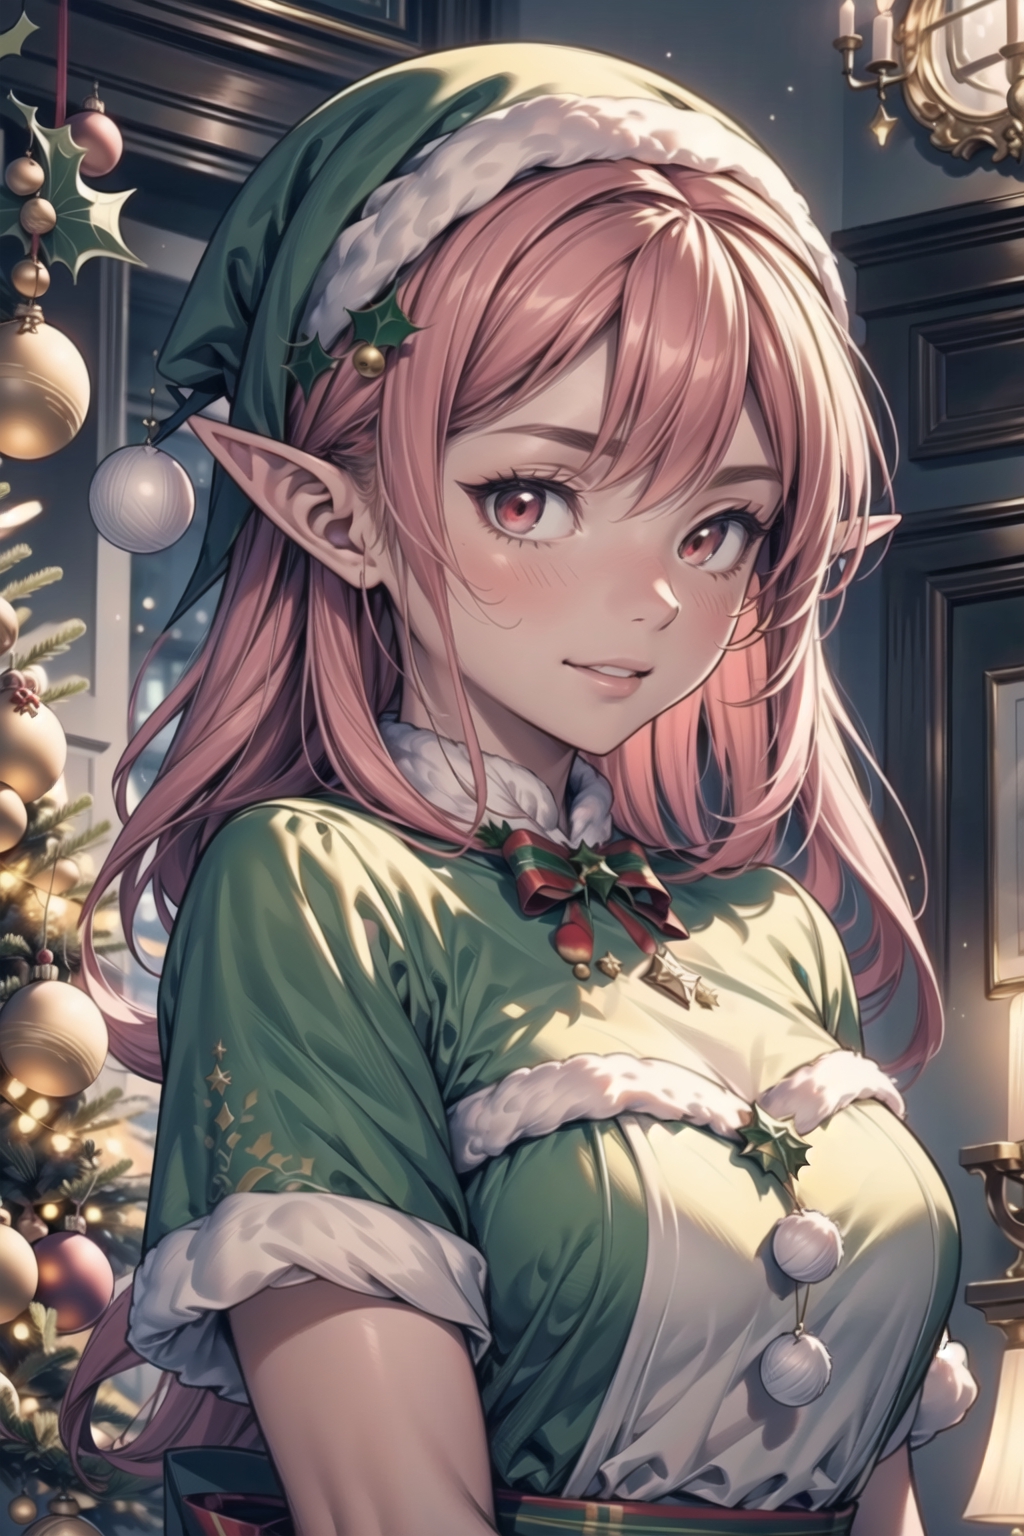 brandon keel share anime christmas elf girl photos